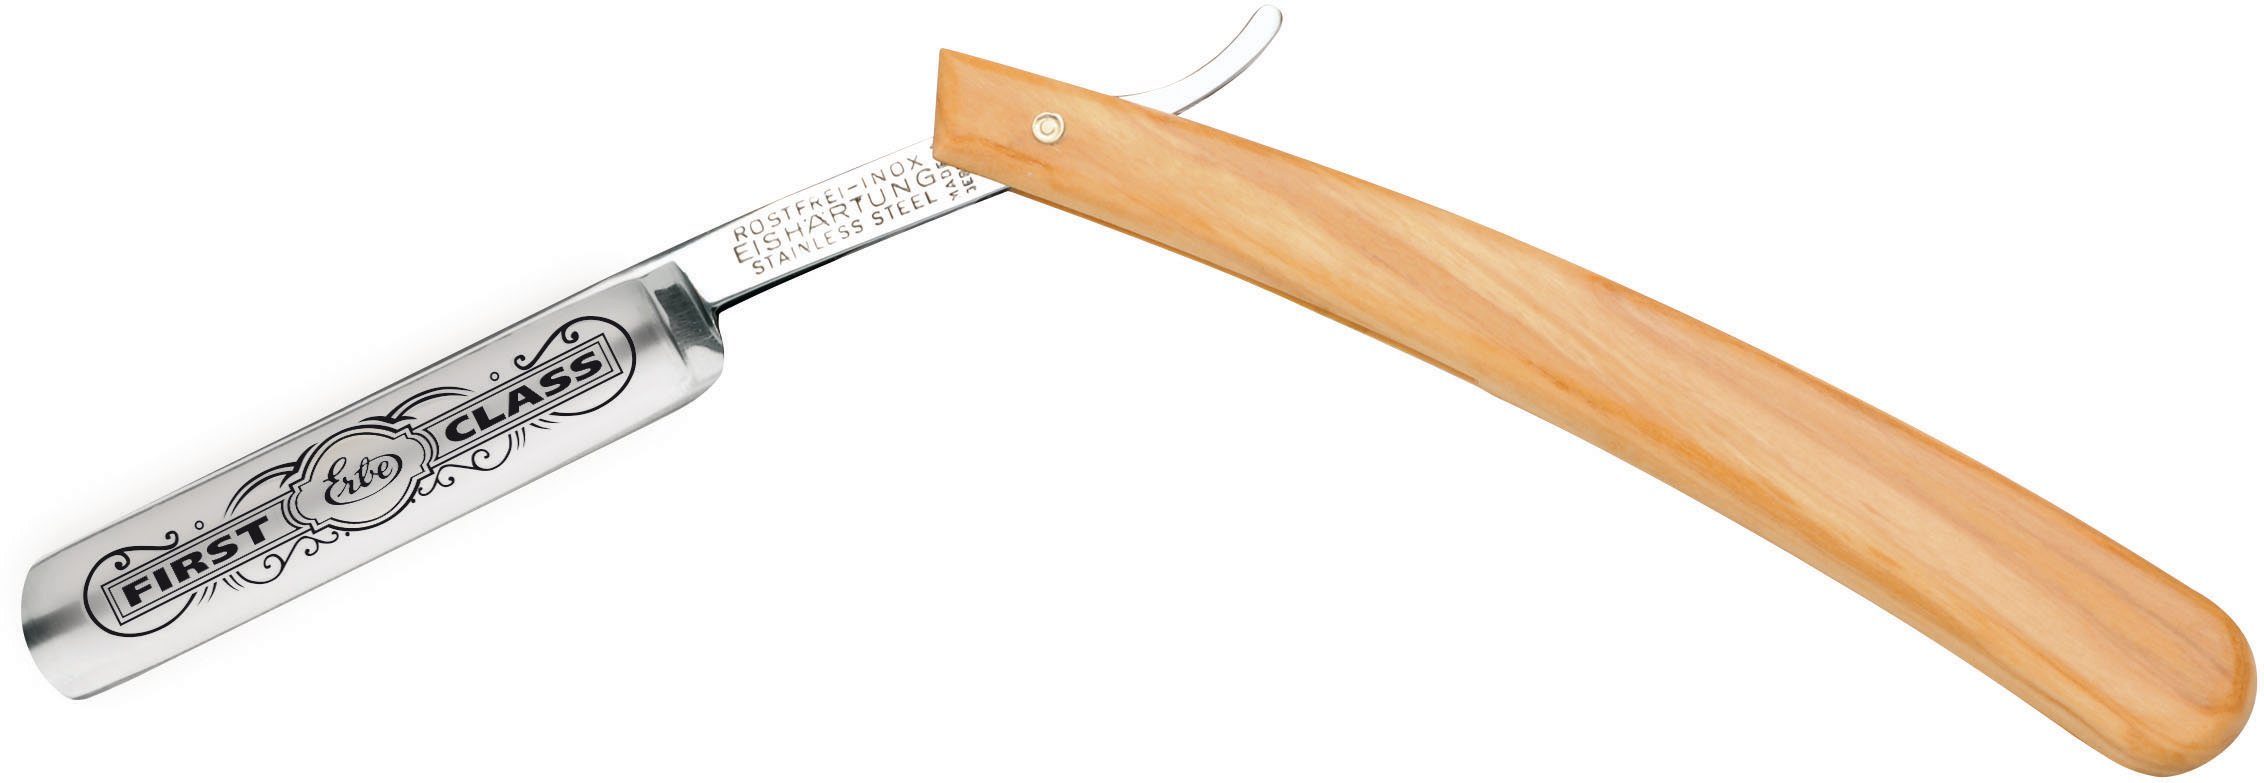 Rasiermesser mit Olivenholz-Griff Qualitäts-Rasiermesser ERBE